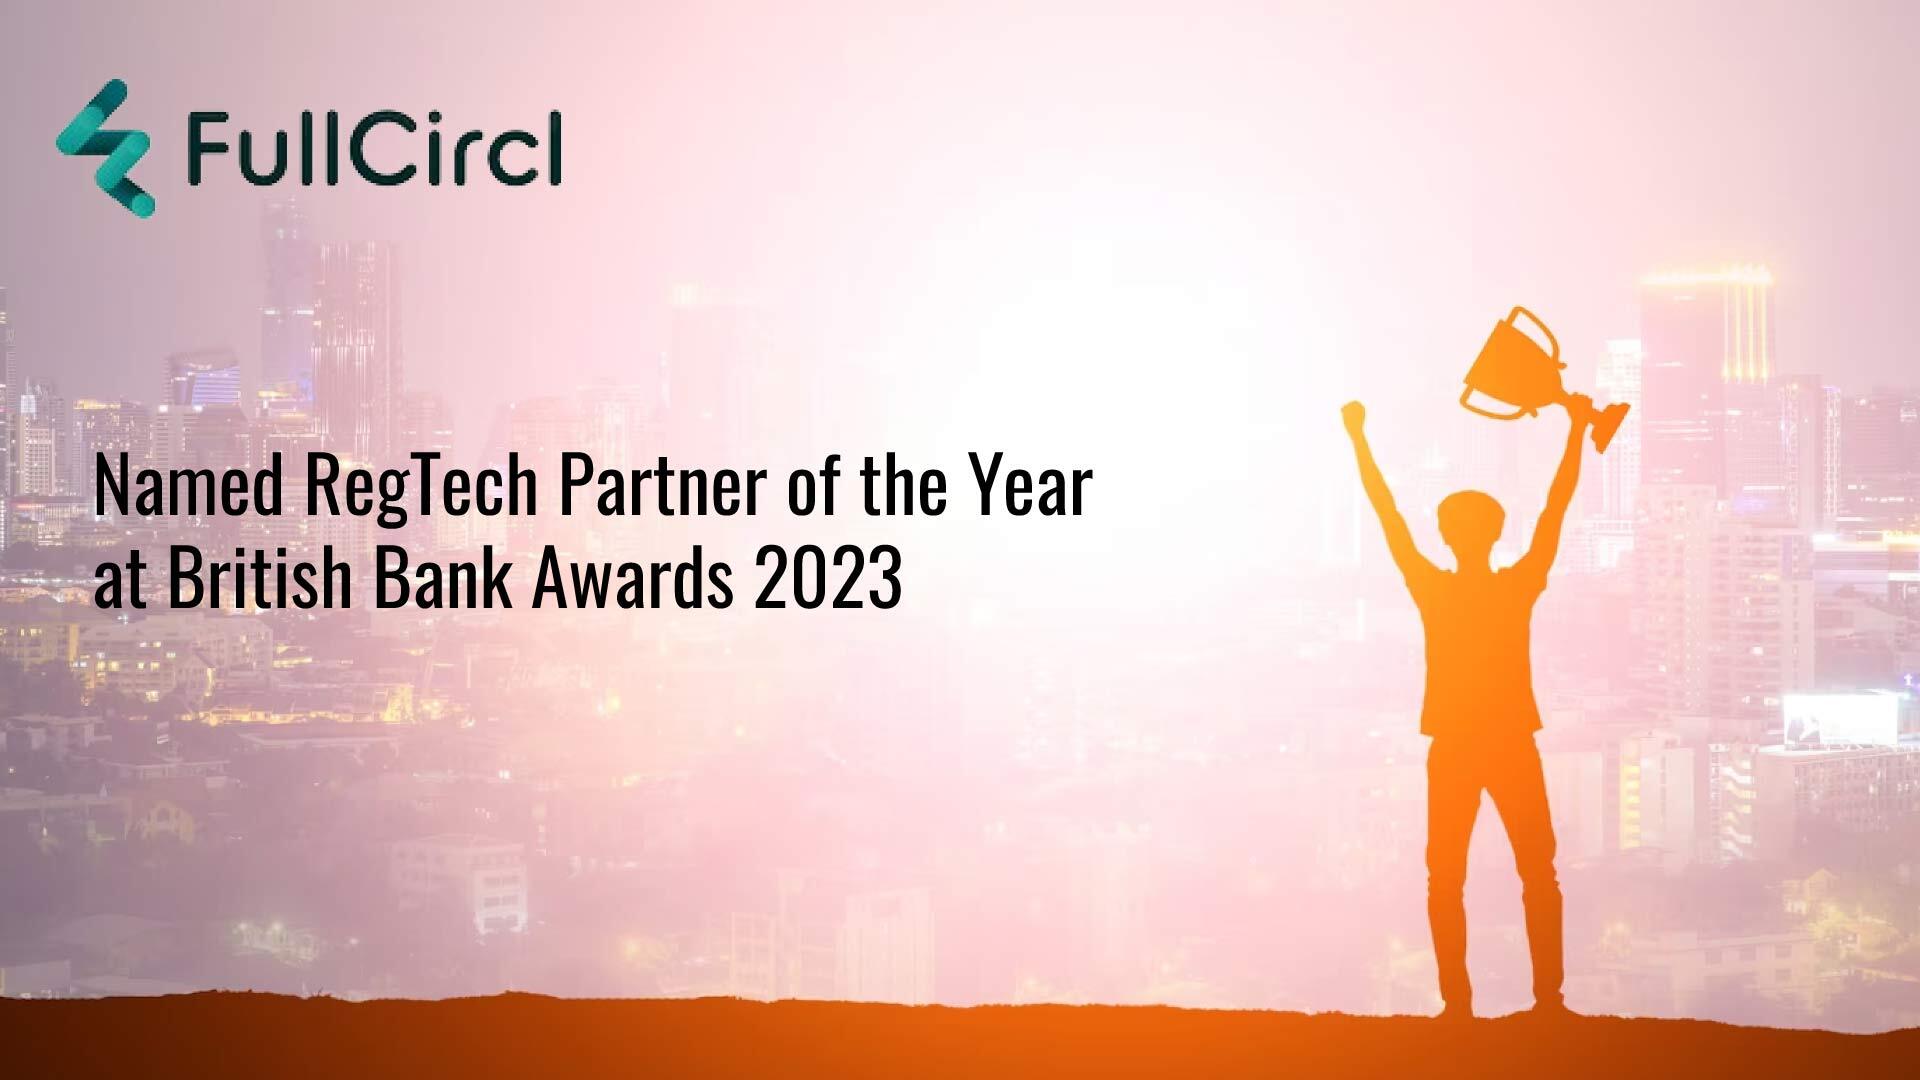 FullCircl named RegTech Partner of the Year at the British Bank Awards 2023